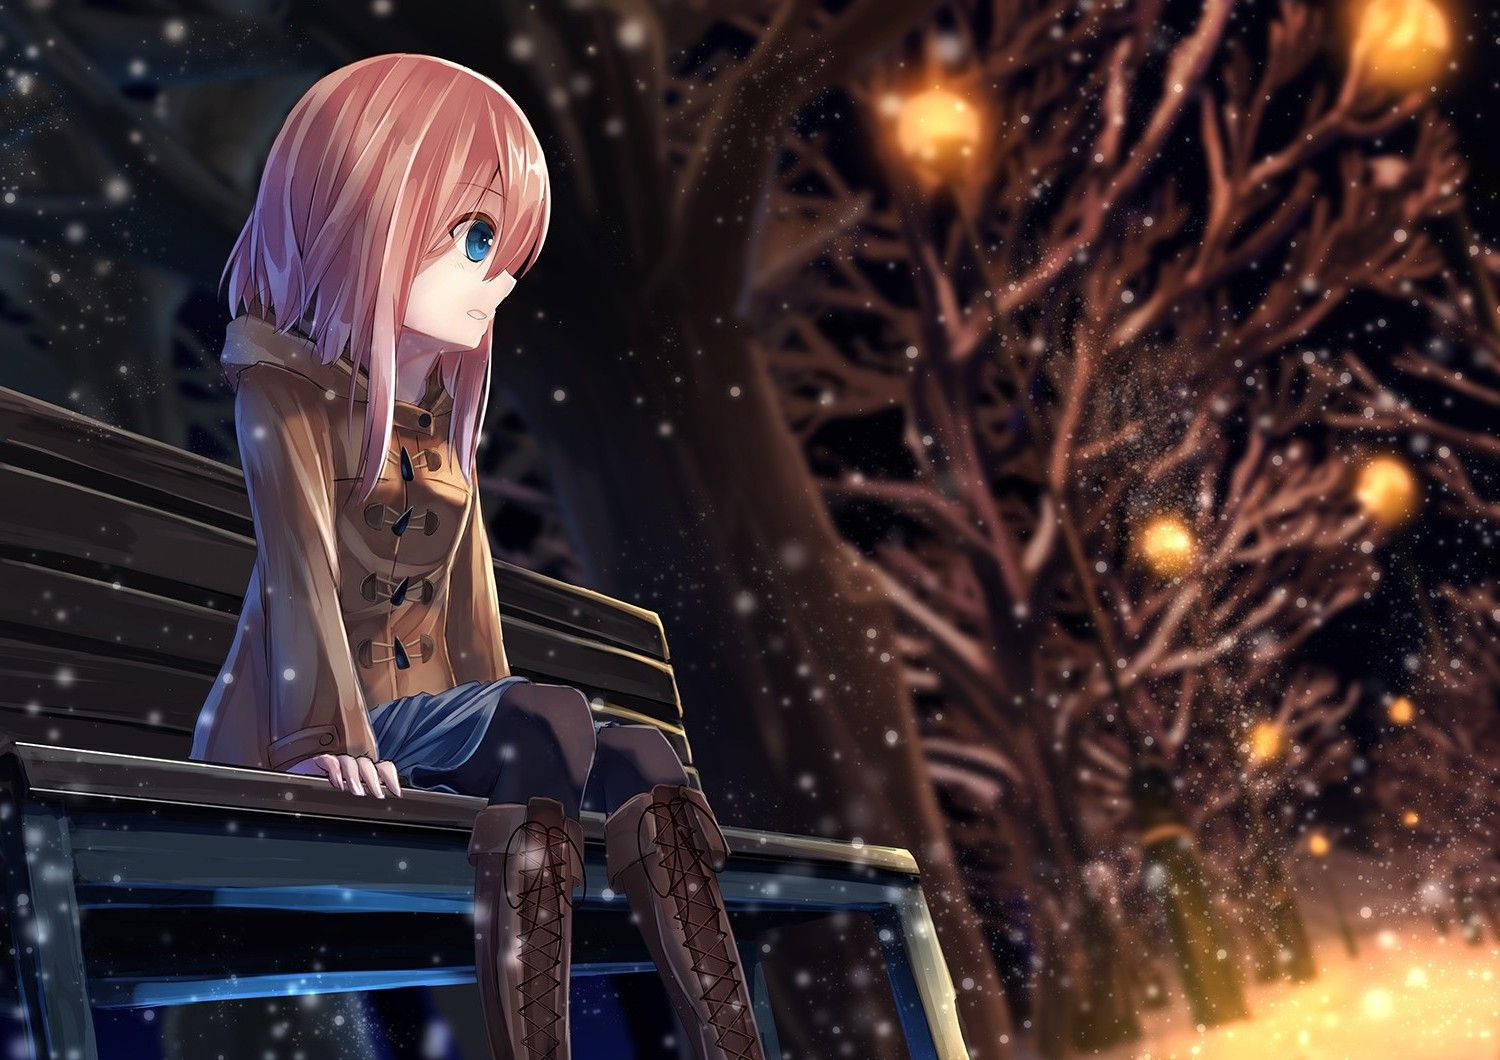 Anime Girl Sad Alone On Park Bench